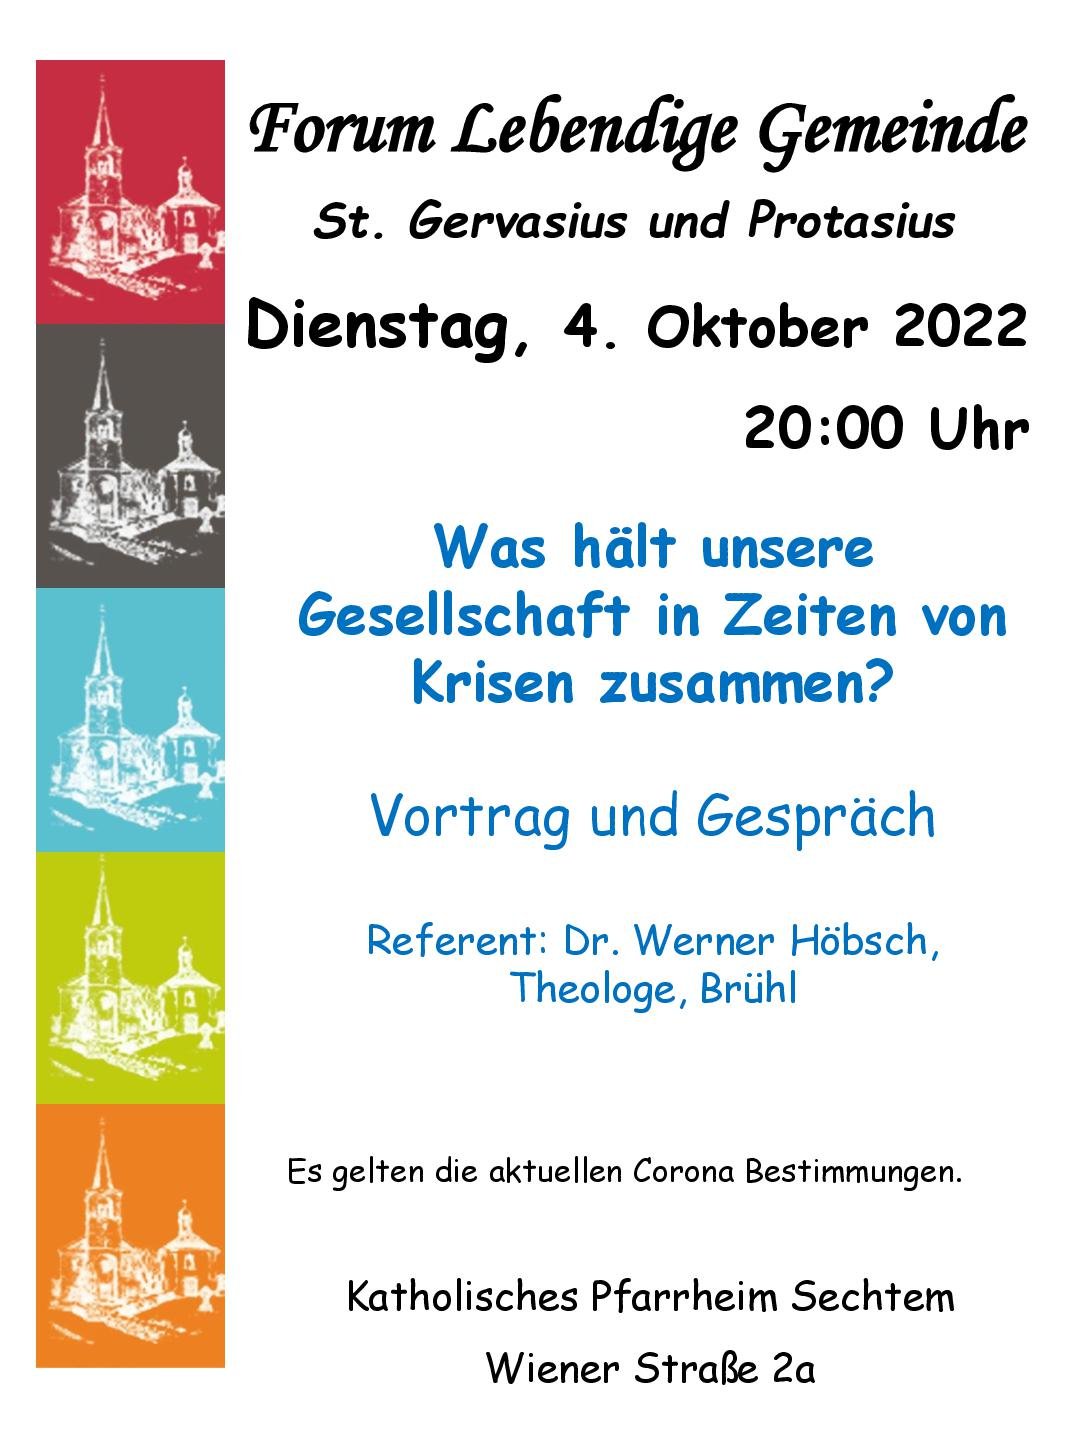 Forum Lebendige Gemeinde Programm 2022-10-04 Höbsch-001 (c) Elke Kluitmann